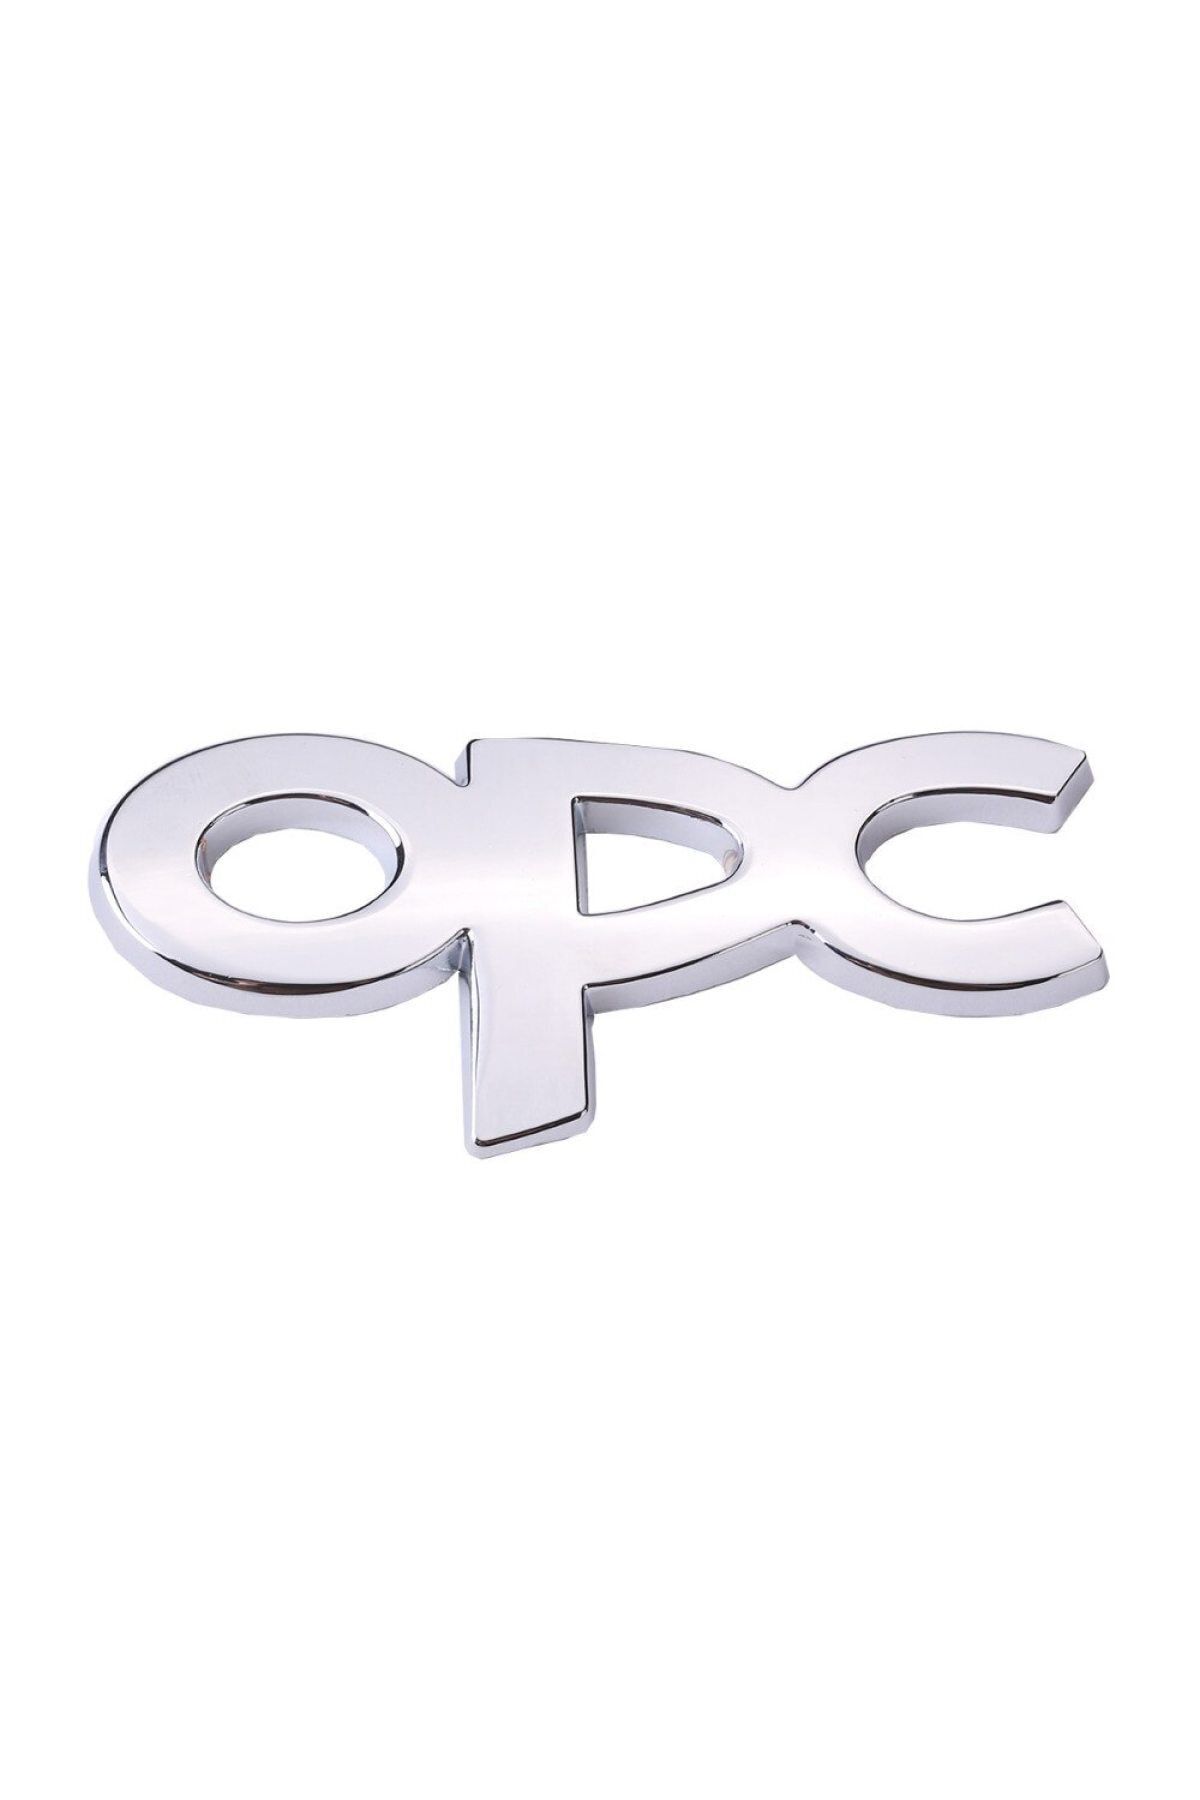 GARDENAUTO Opel Opc Uyumlu Metal 3d Çamurluk Amblem Logo Orjinal Style 2 Adet